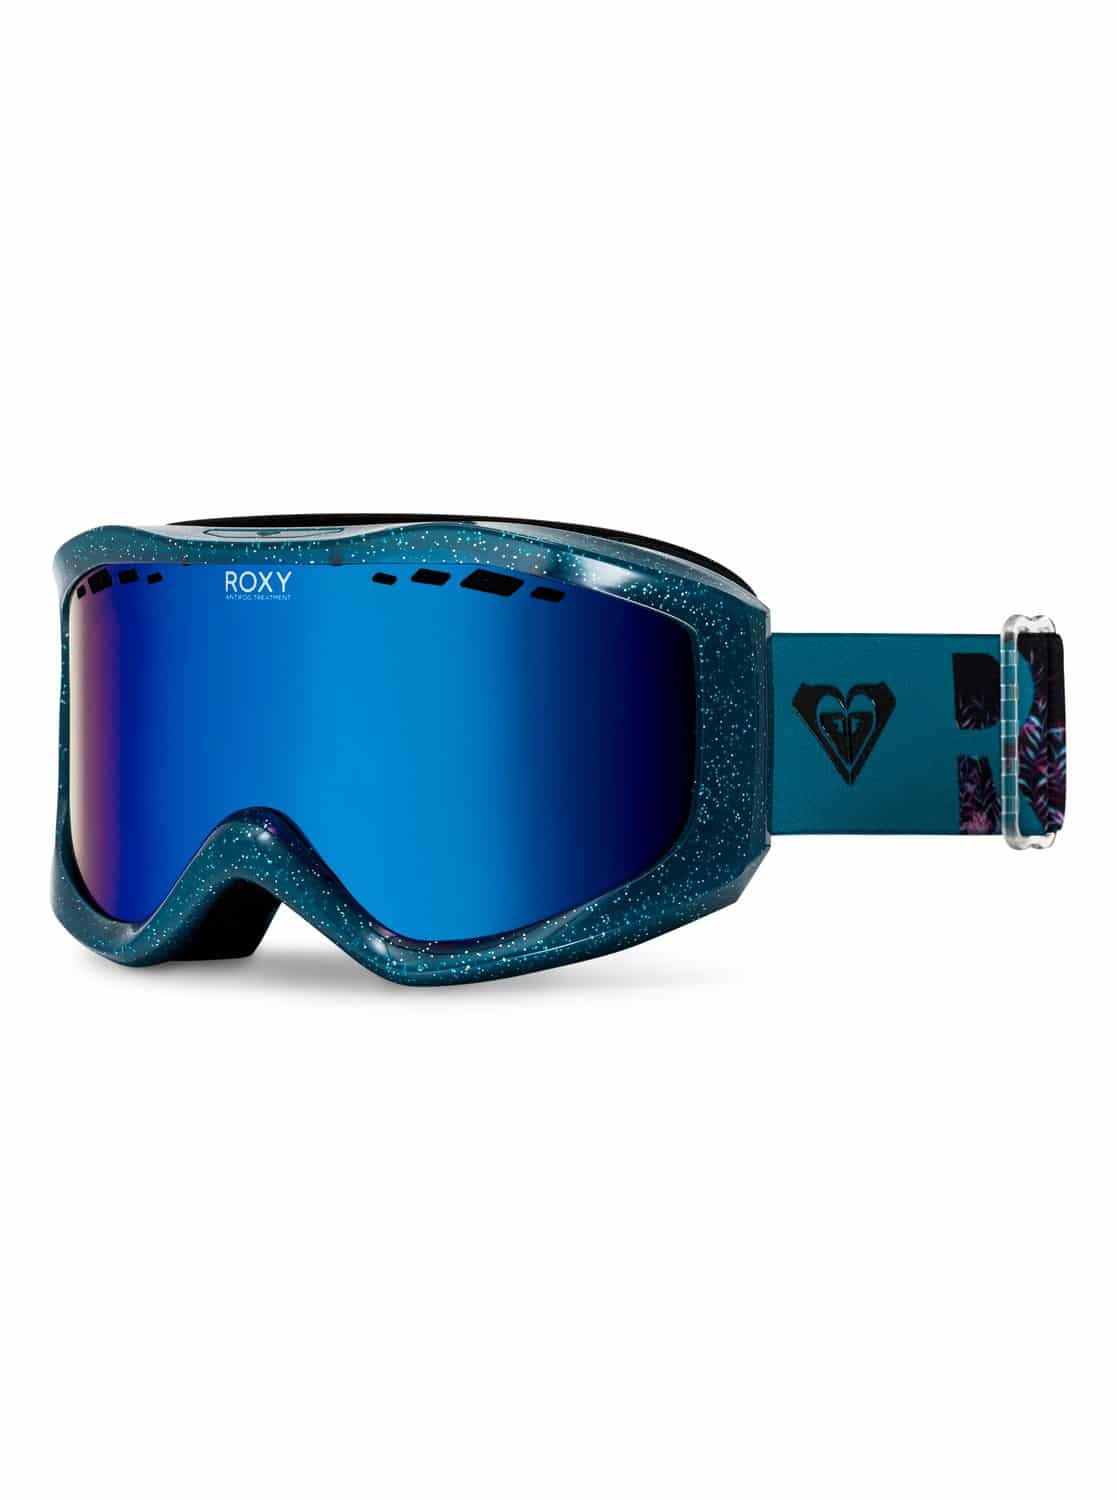 QUIKSILVER / ROXY Roxy STORM - Gafas de snow/esquí mujer blue - Private  Sport Shop